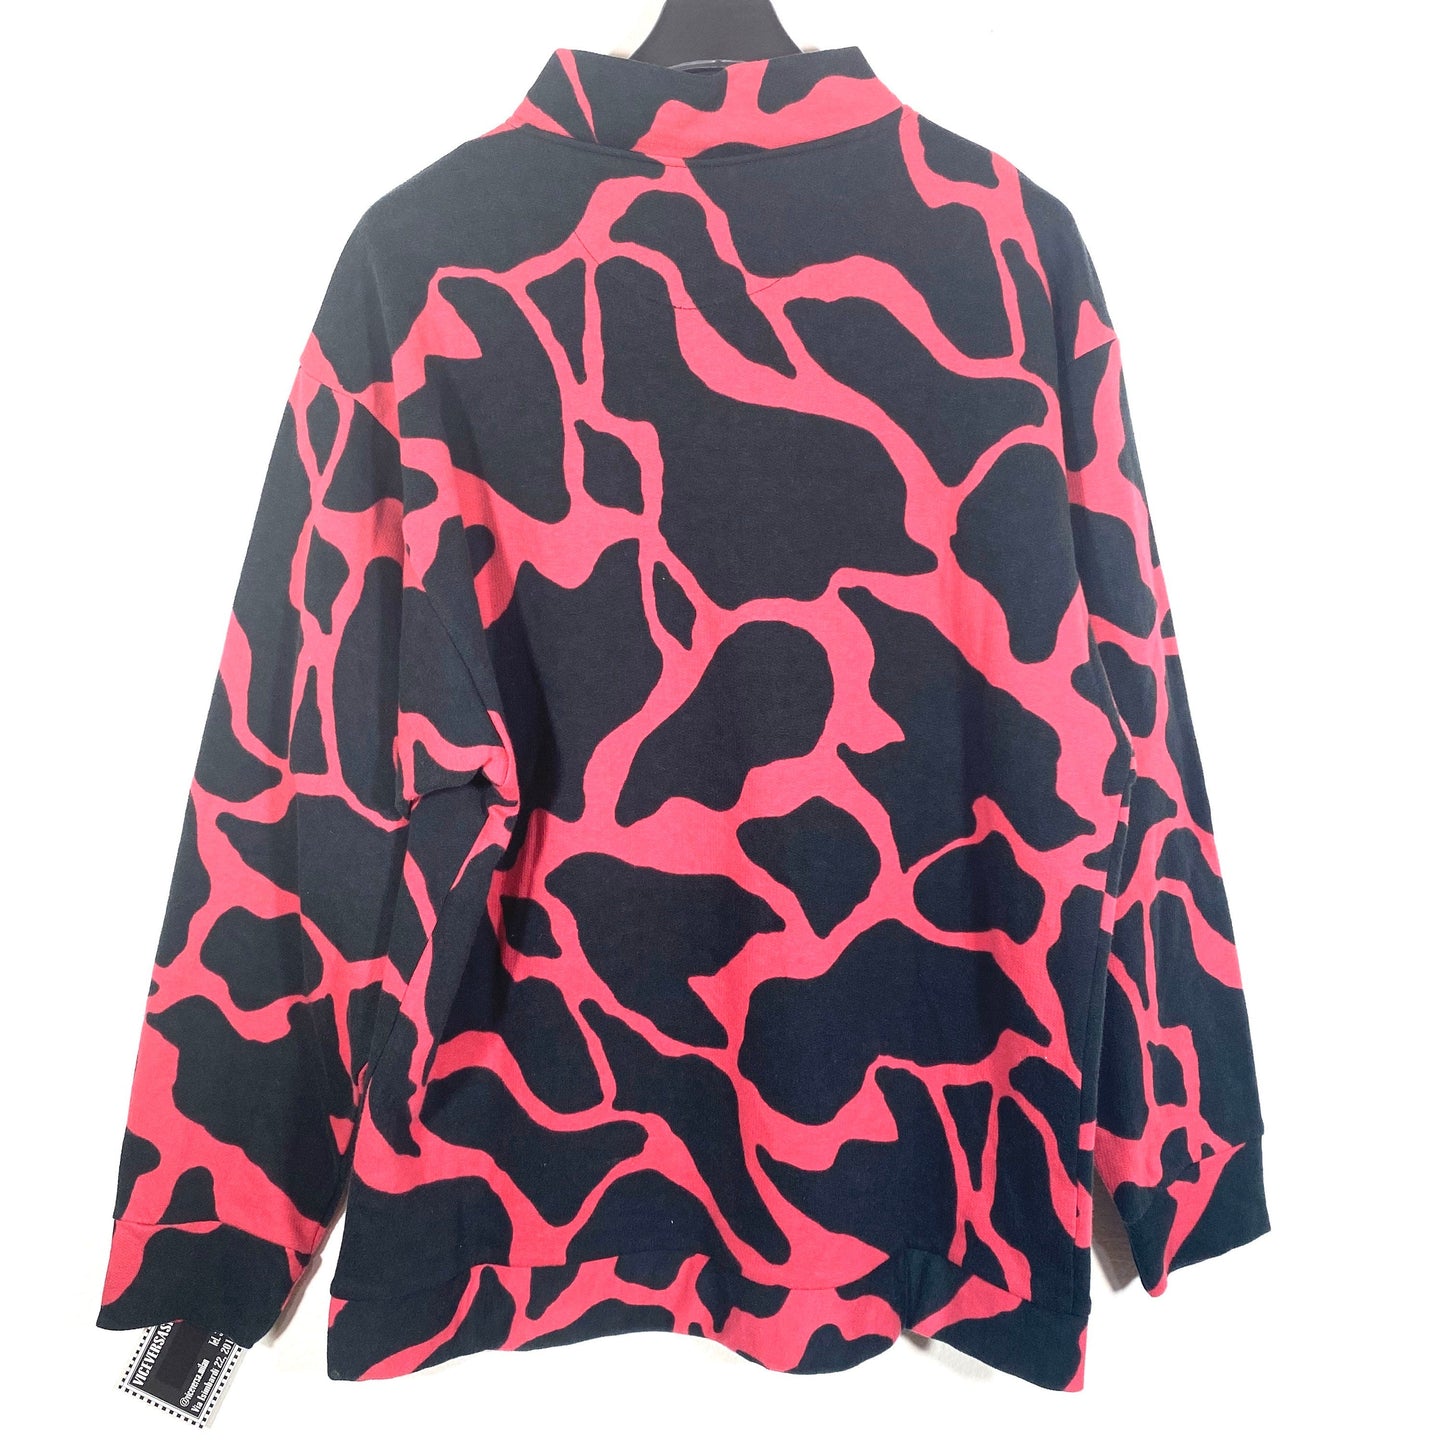 Pink / Black coolest Giraffe animalier print sweatshirt in pure cotton, NOS 80s